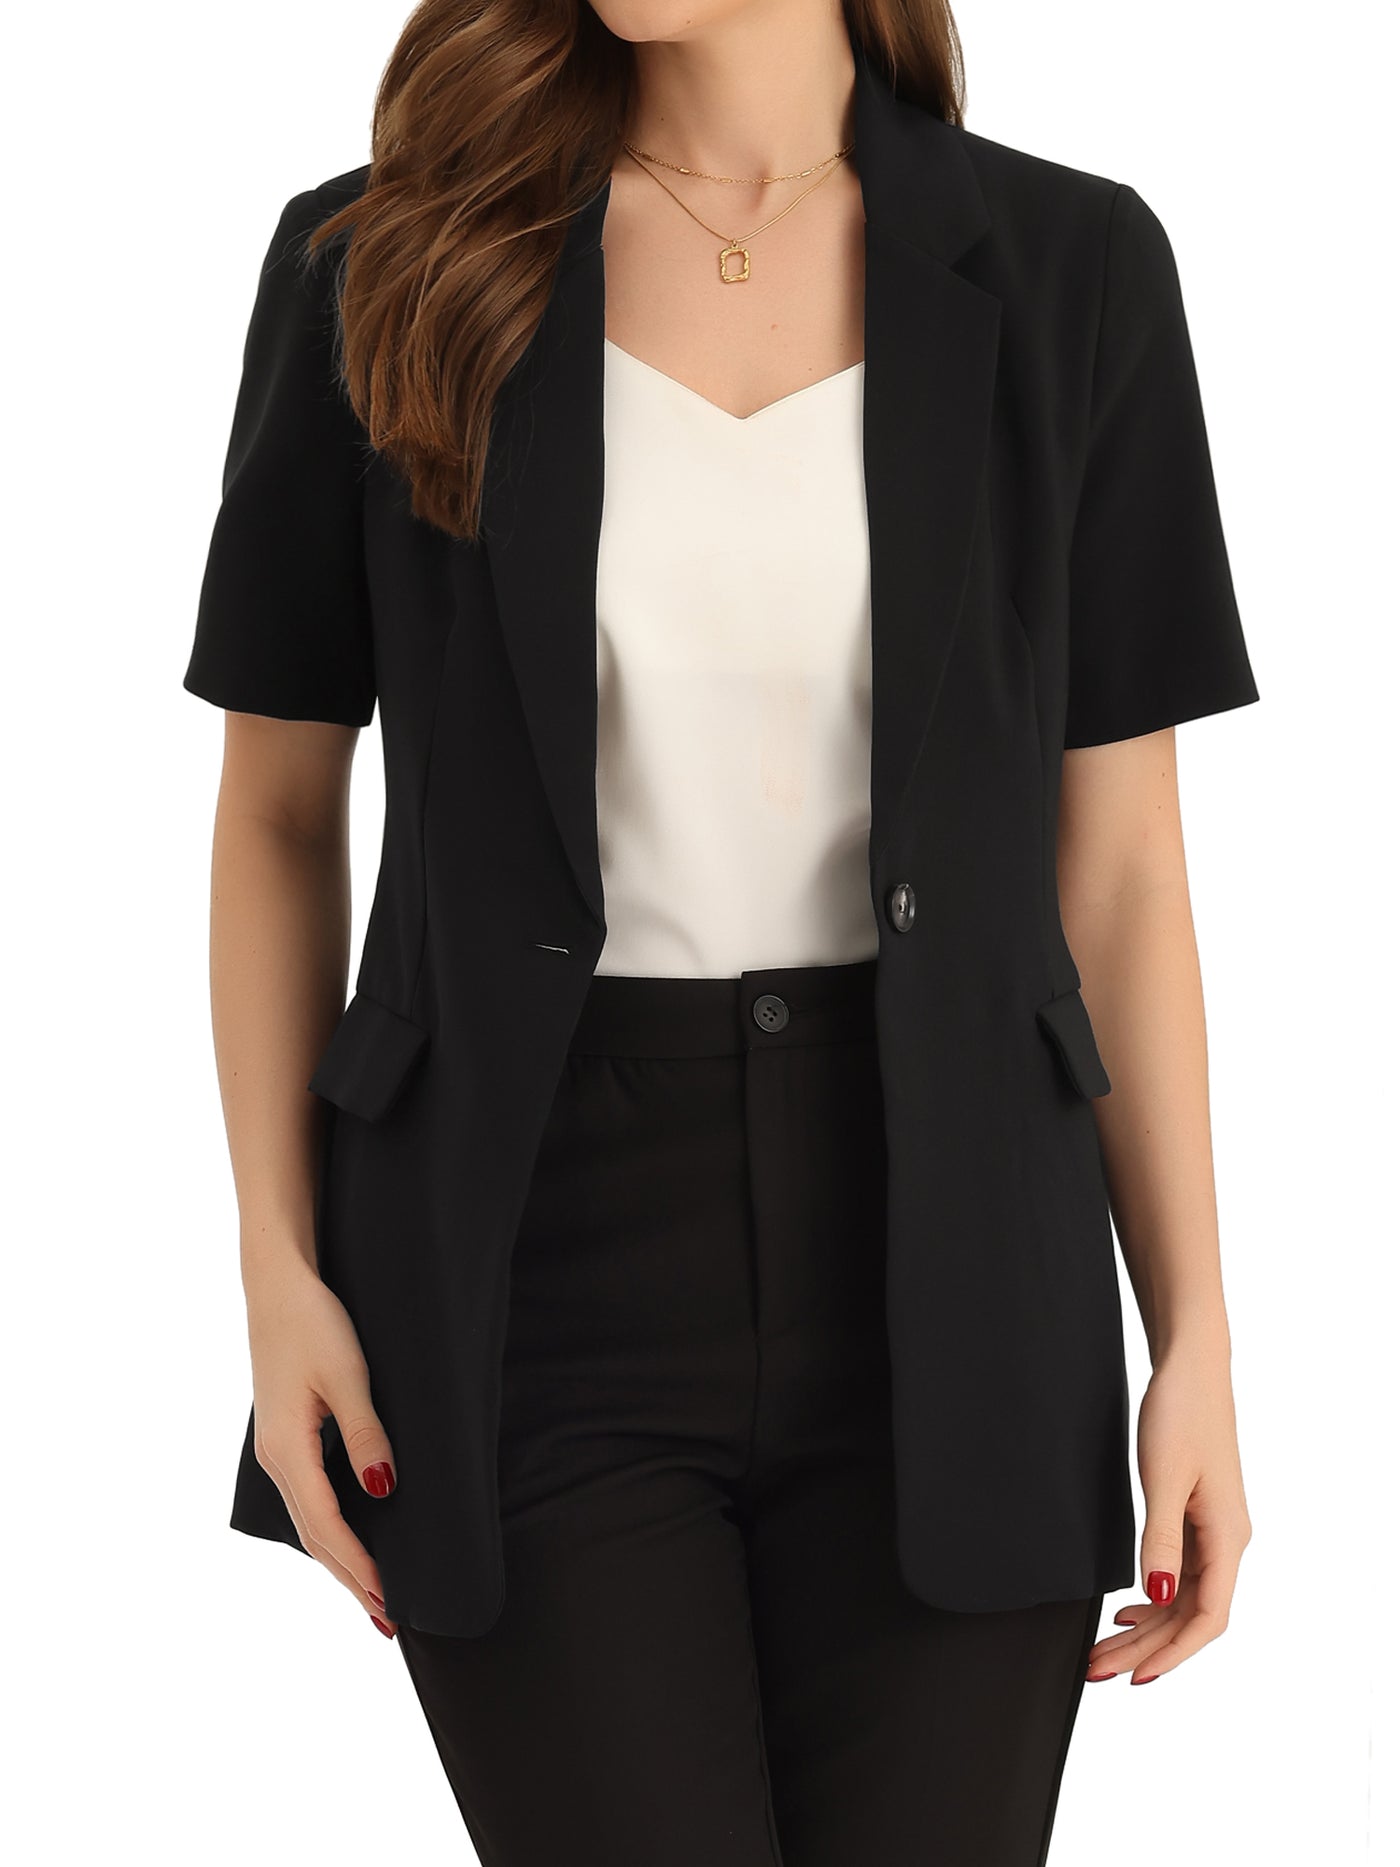 Allegra K Lapel Blazer for Women Short Sleeve Button Down Open Front Office Work Blazers with Pockets